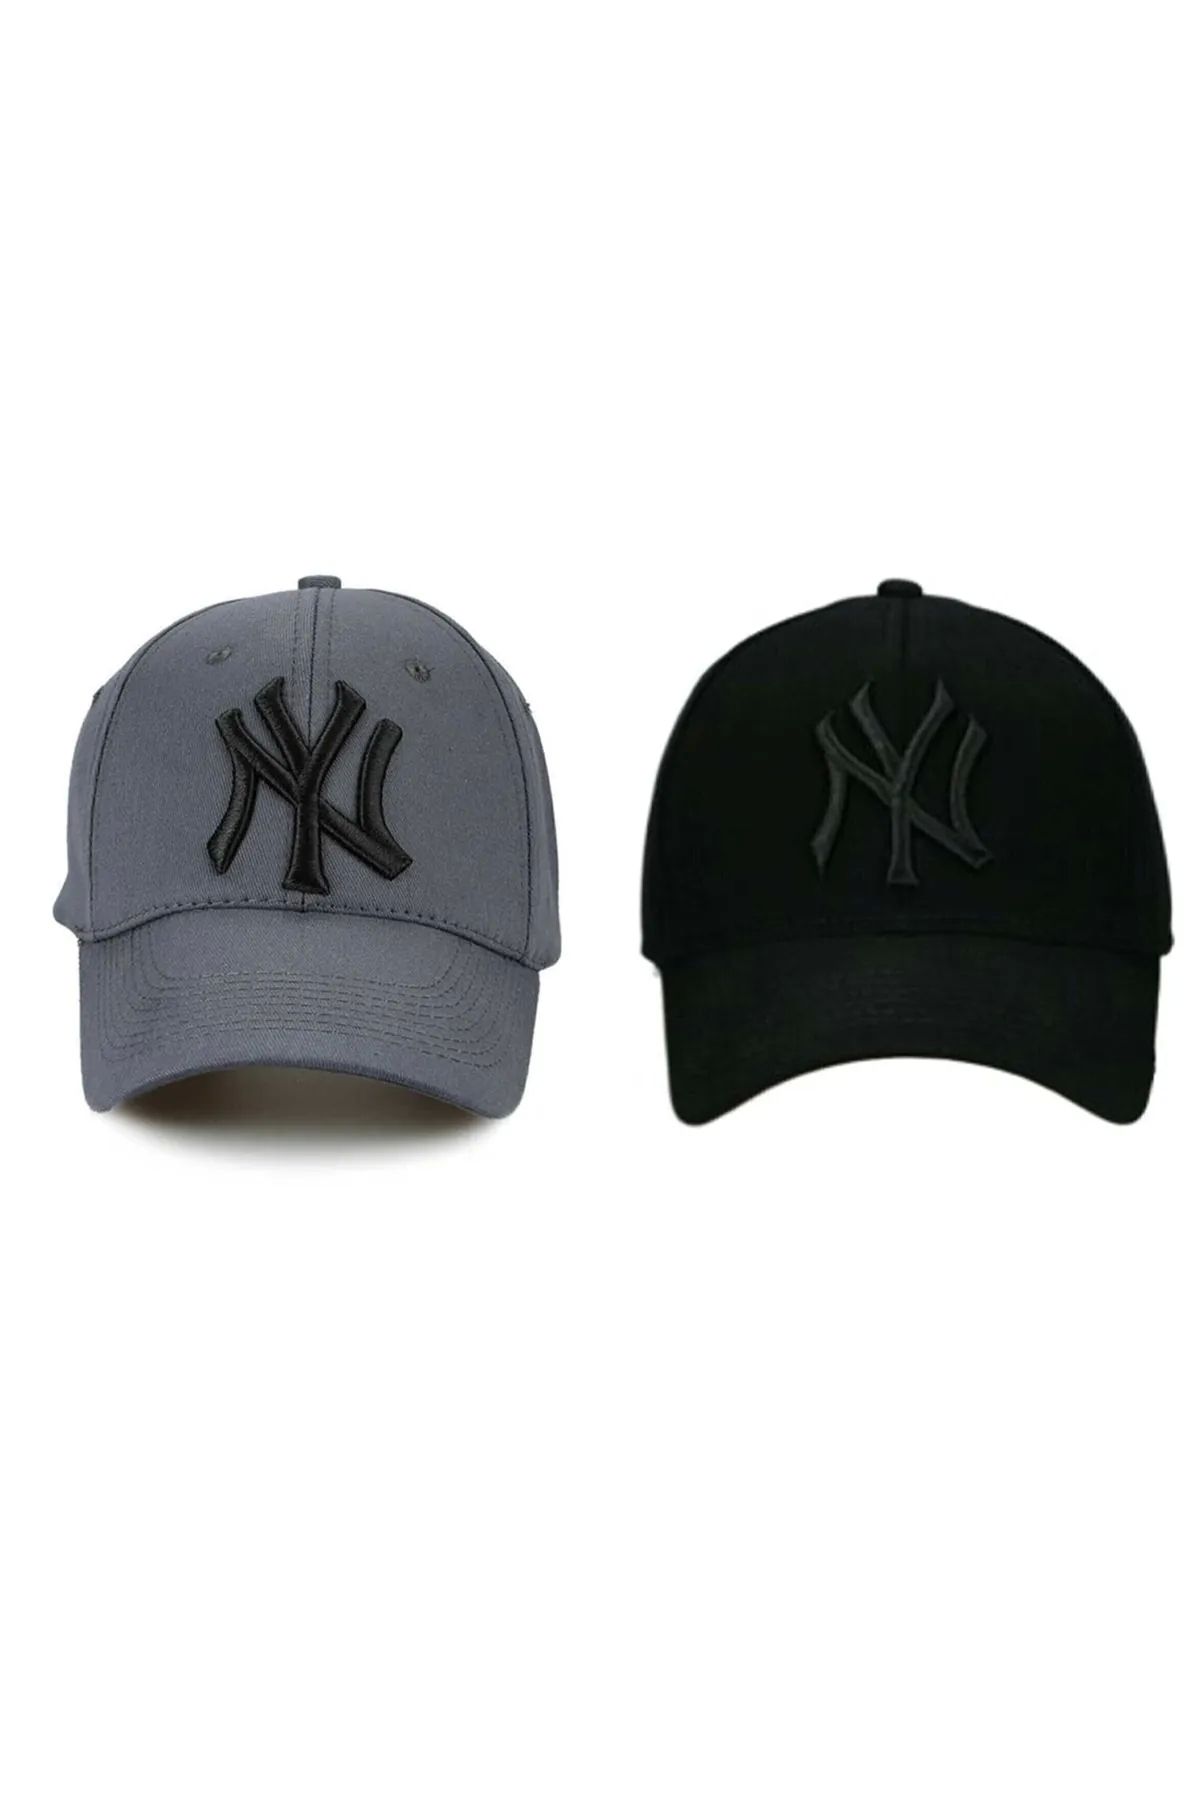 MinaCarin Ny New York 2'li Unisex Set Şapka Füme Ve Siyah